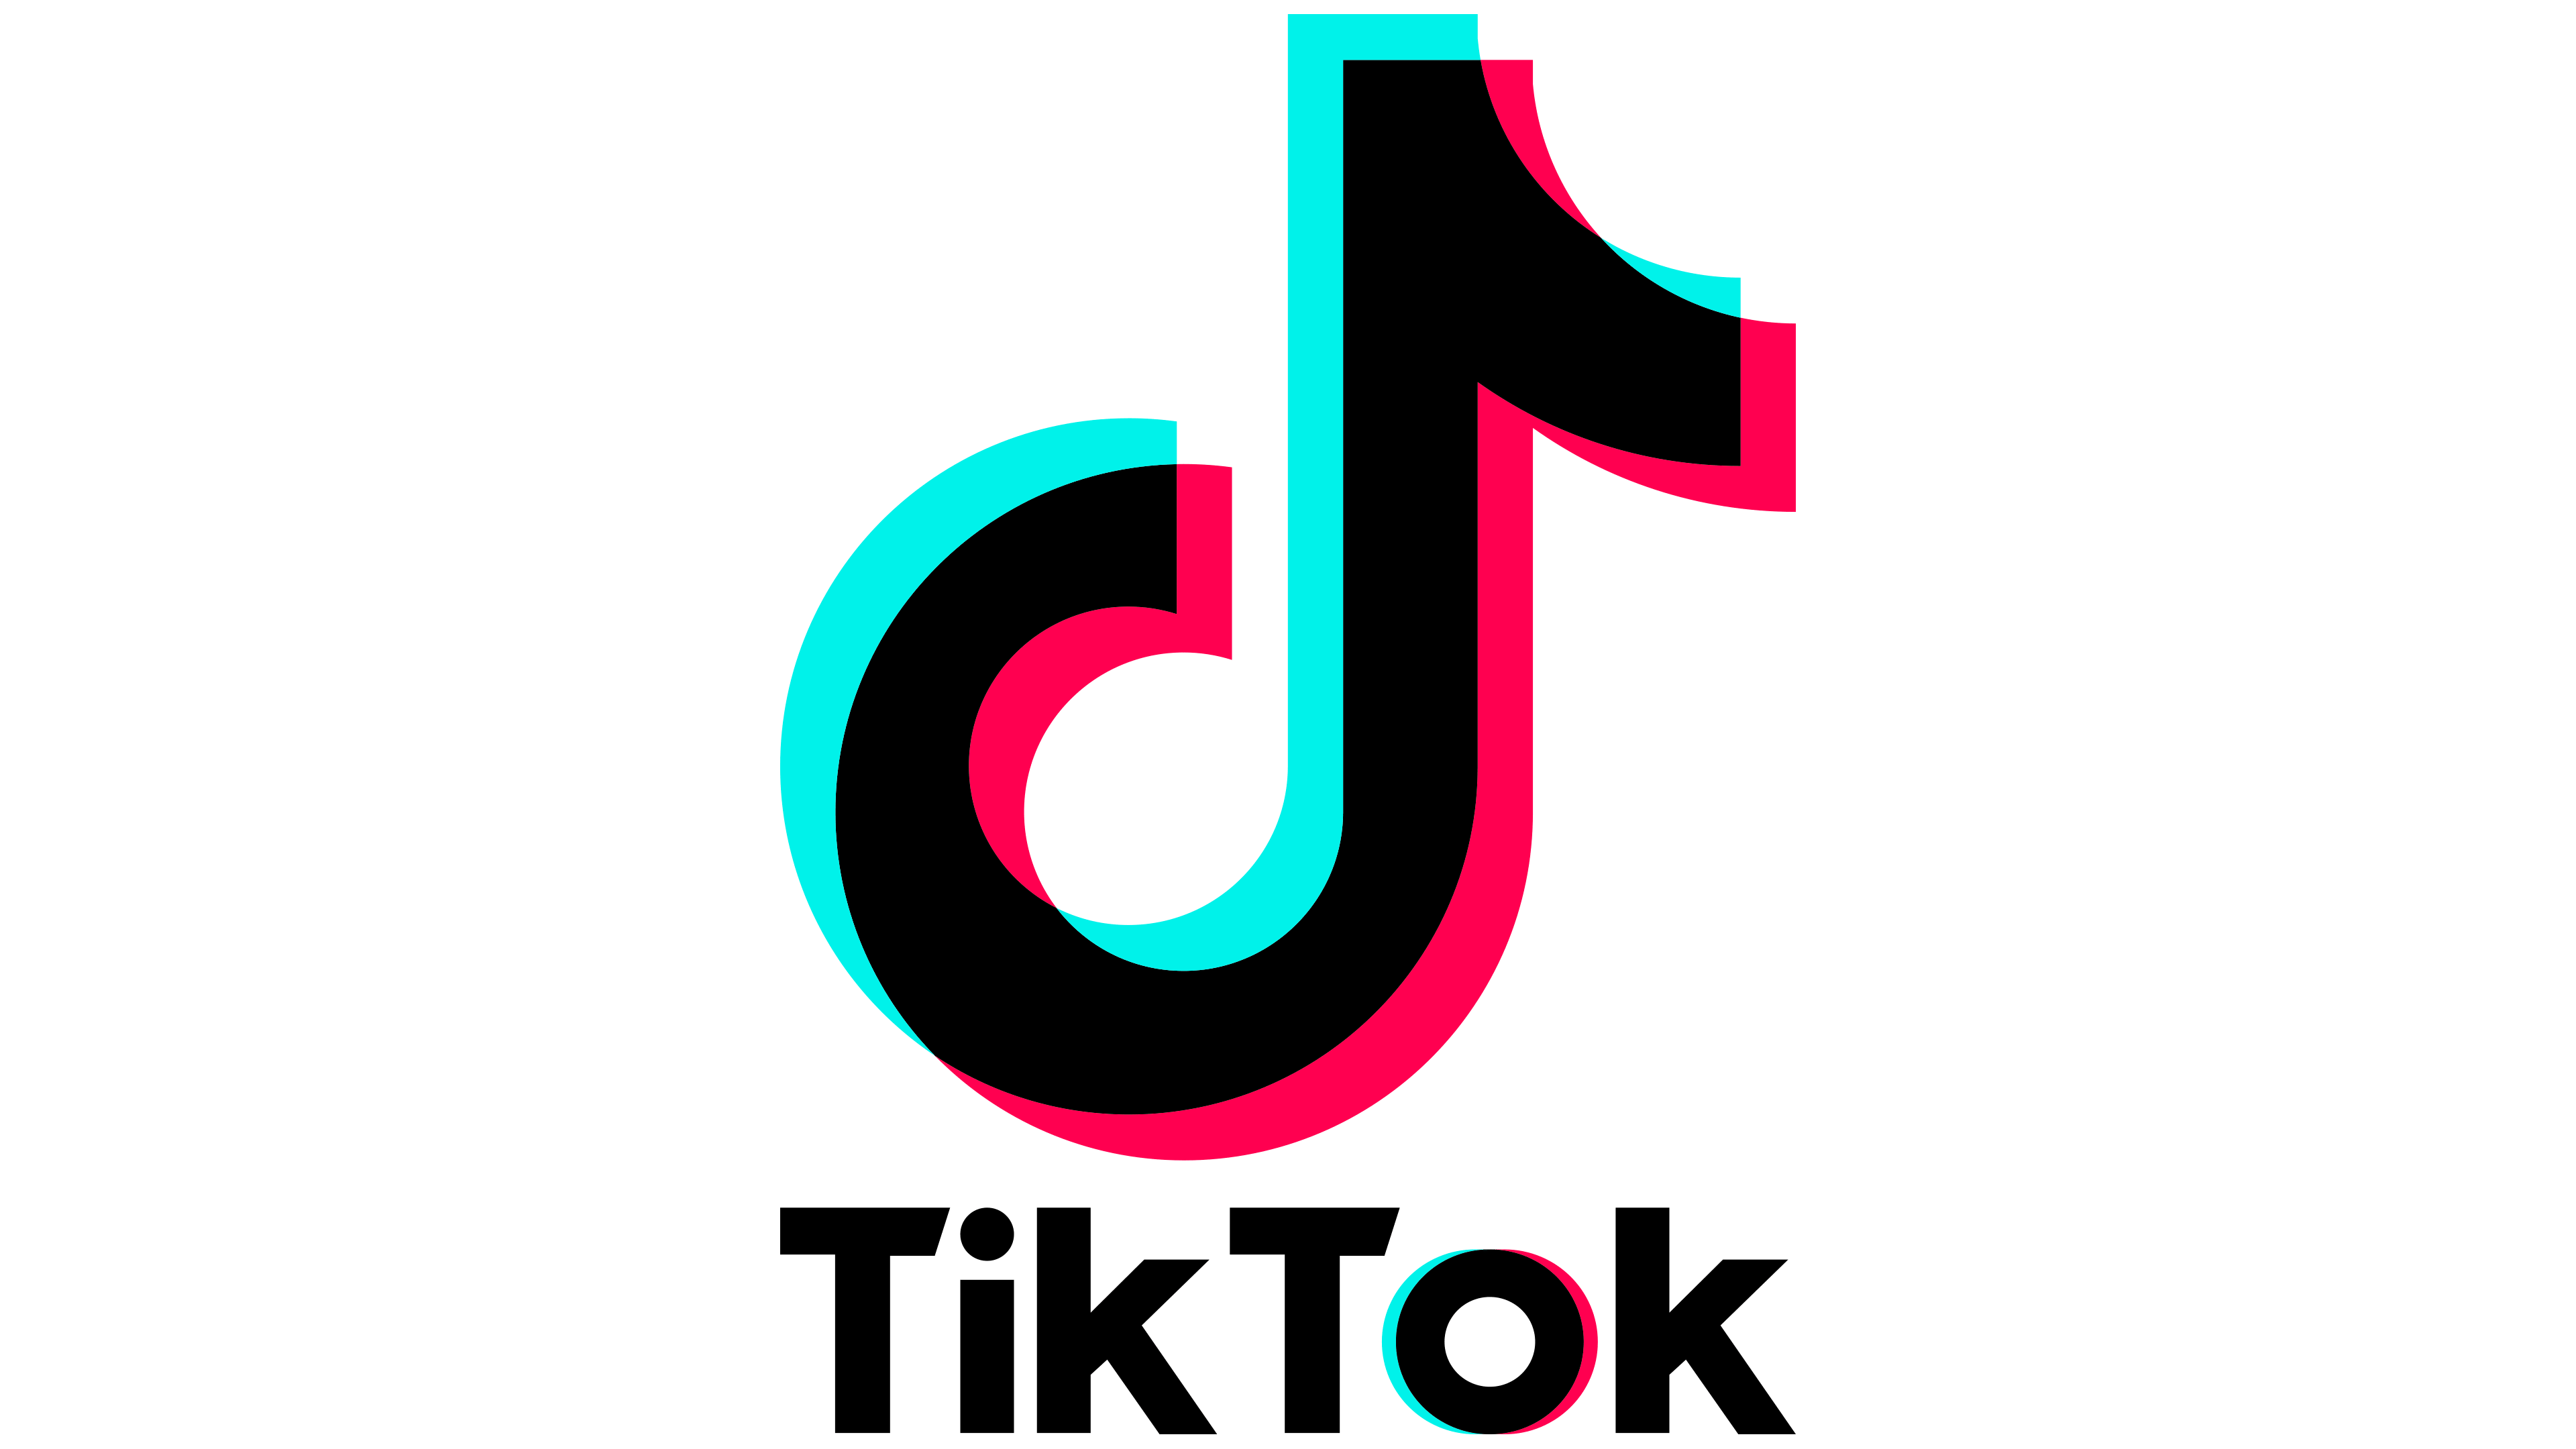 Tiktok Logo PNG Picture